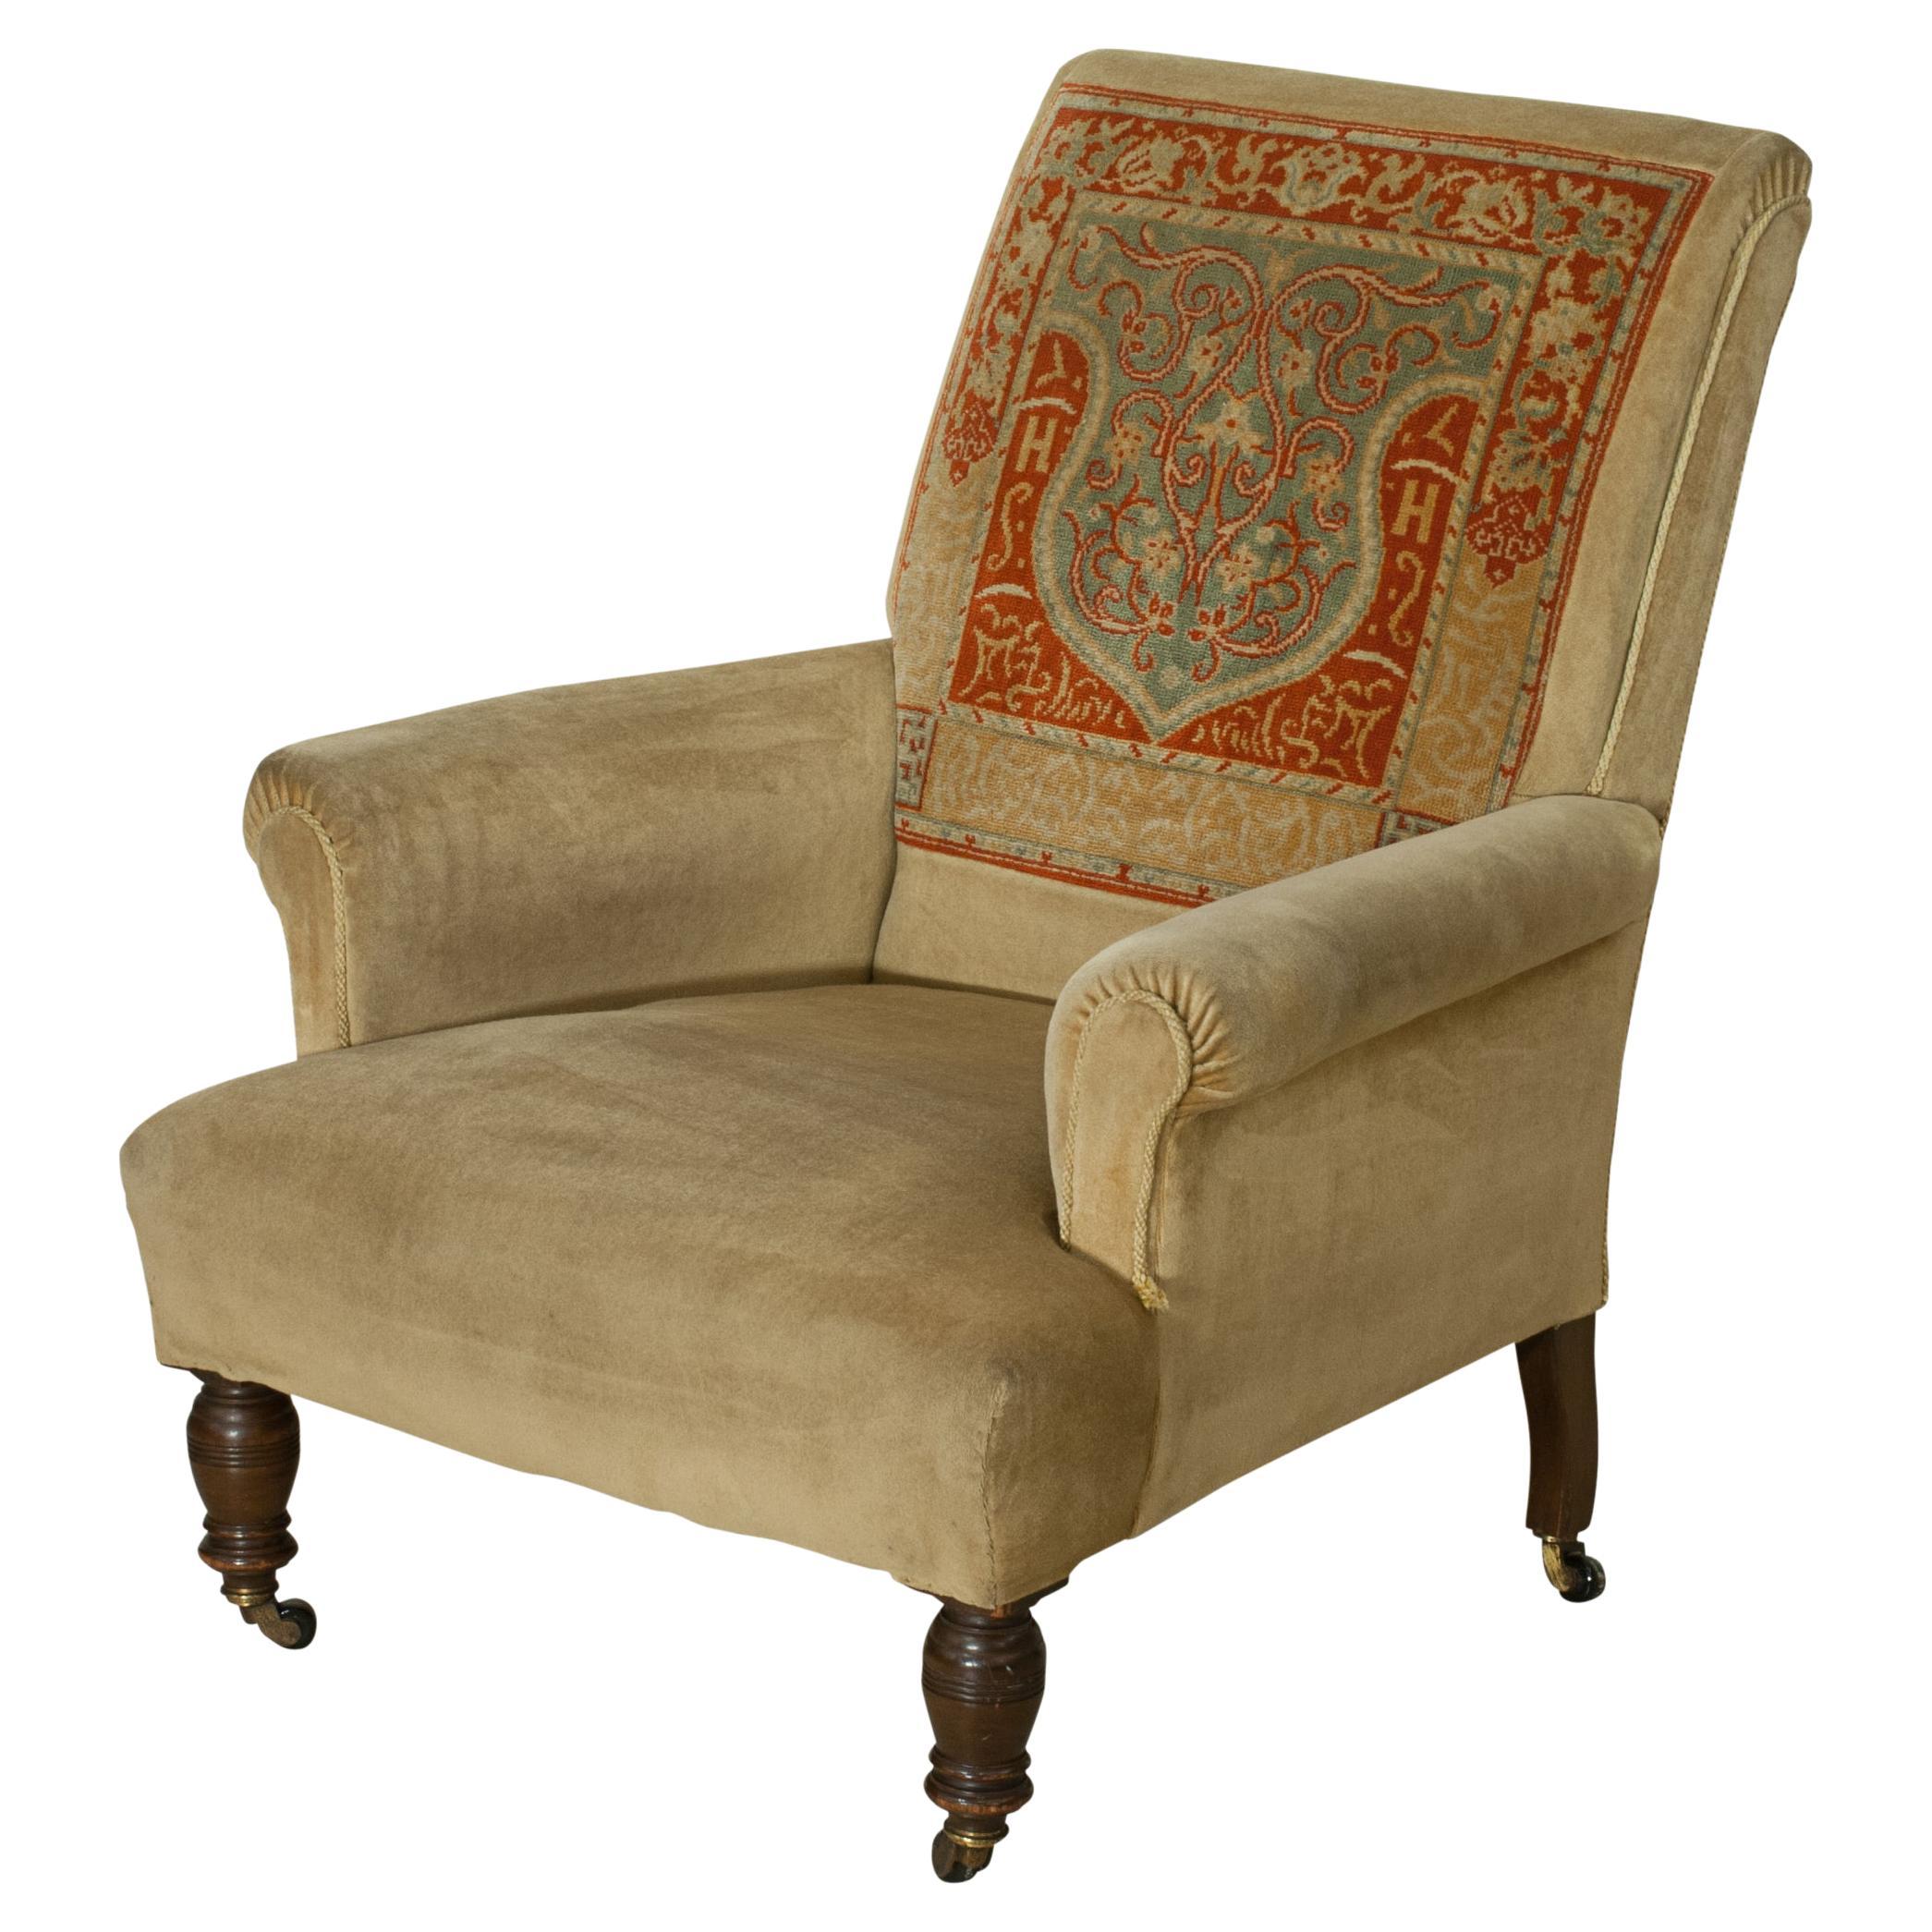 Antique Armchair with Carpet Back